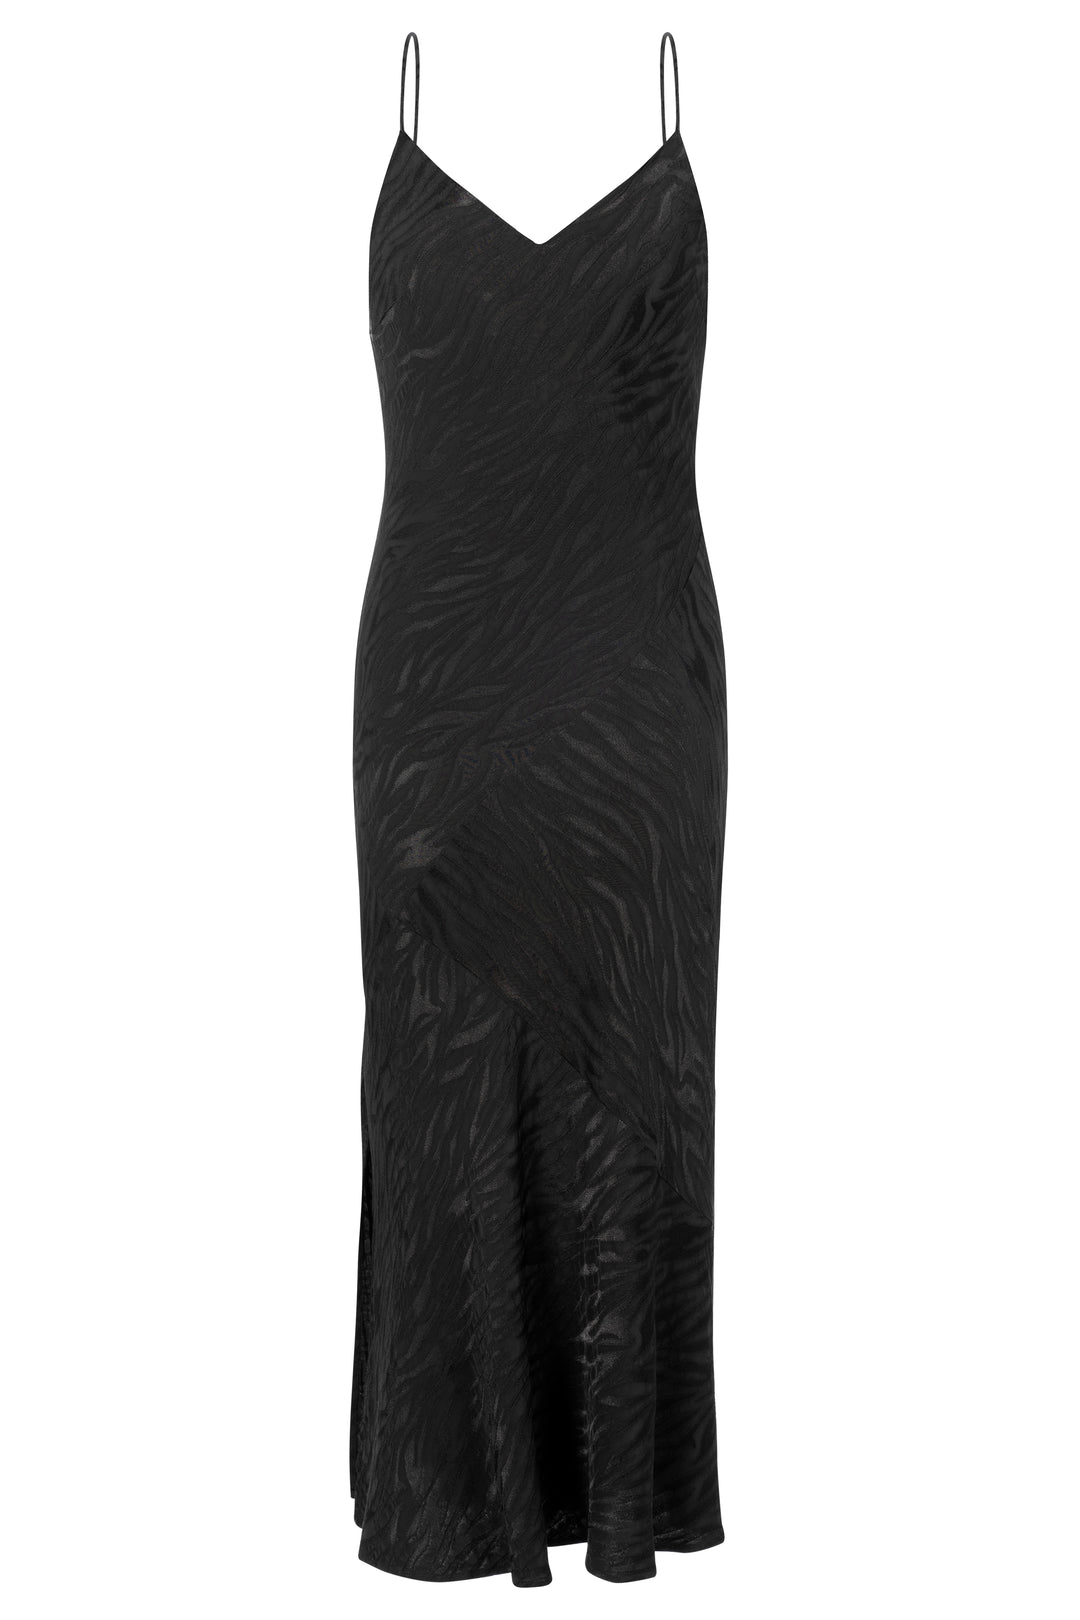 Black slip dress